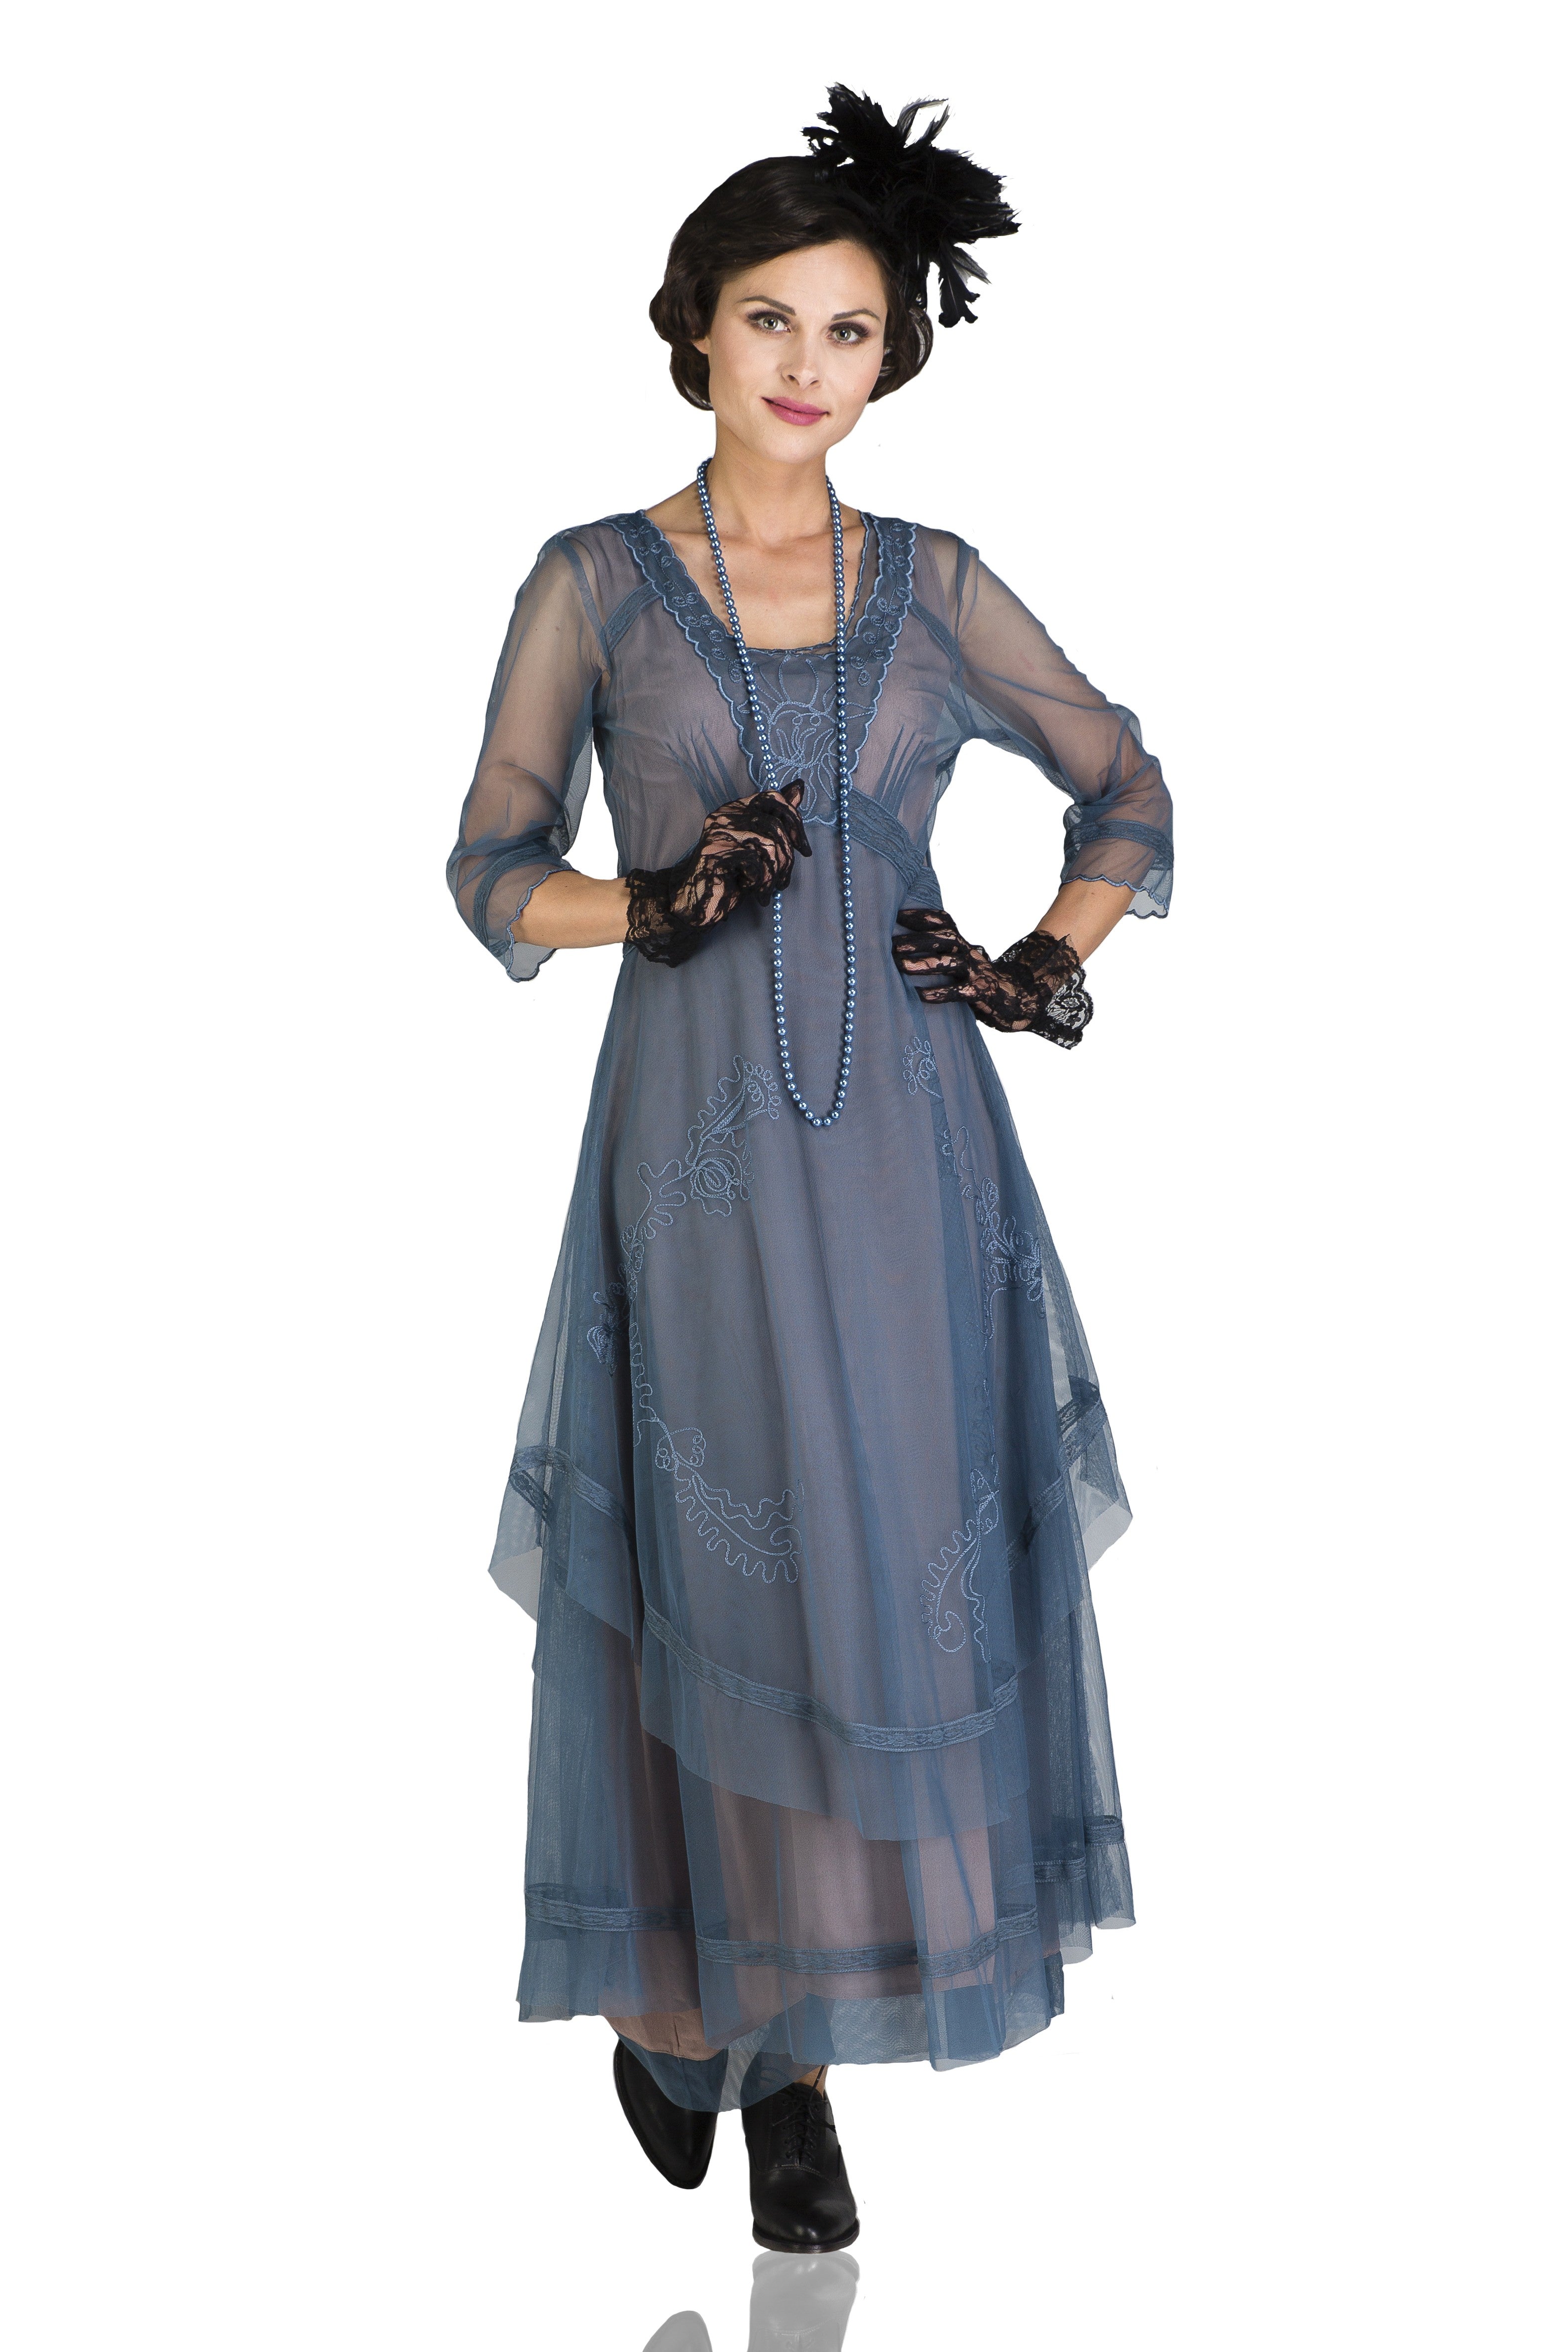 Edwardian Fashion, Clothing & Costumes 1900 – 1910s Mary Darling Dress in Azure by Nataya $265.00 AT vintagedancer.com